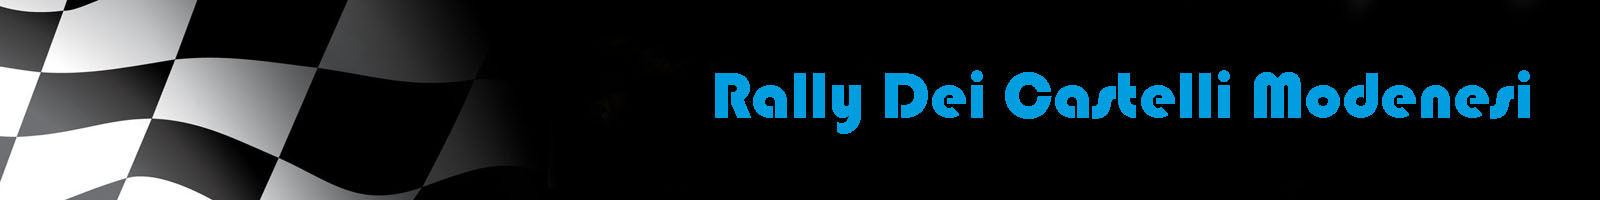 013 Rally Castelli Modenesi